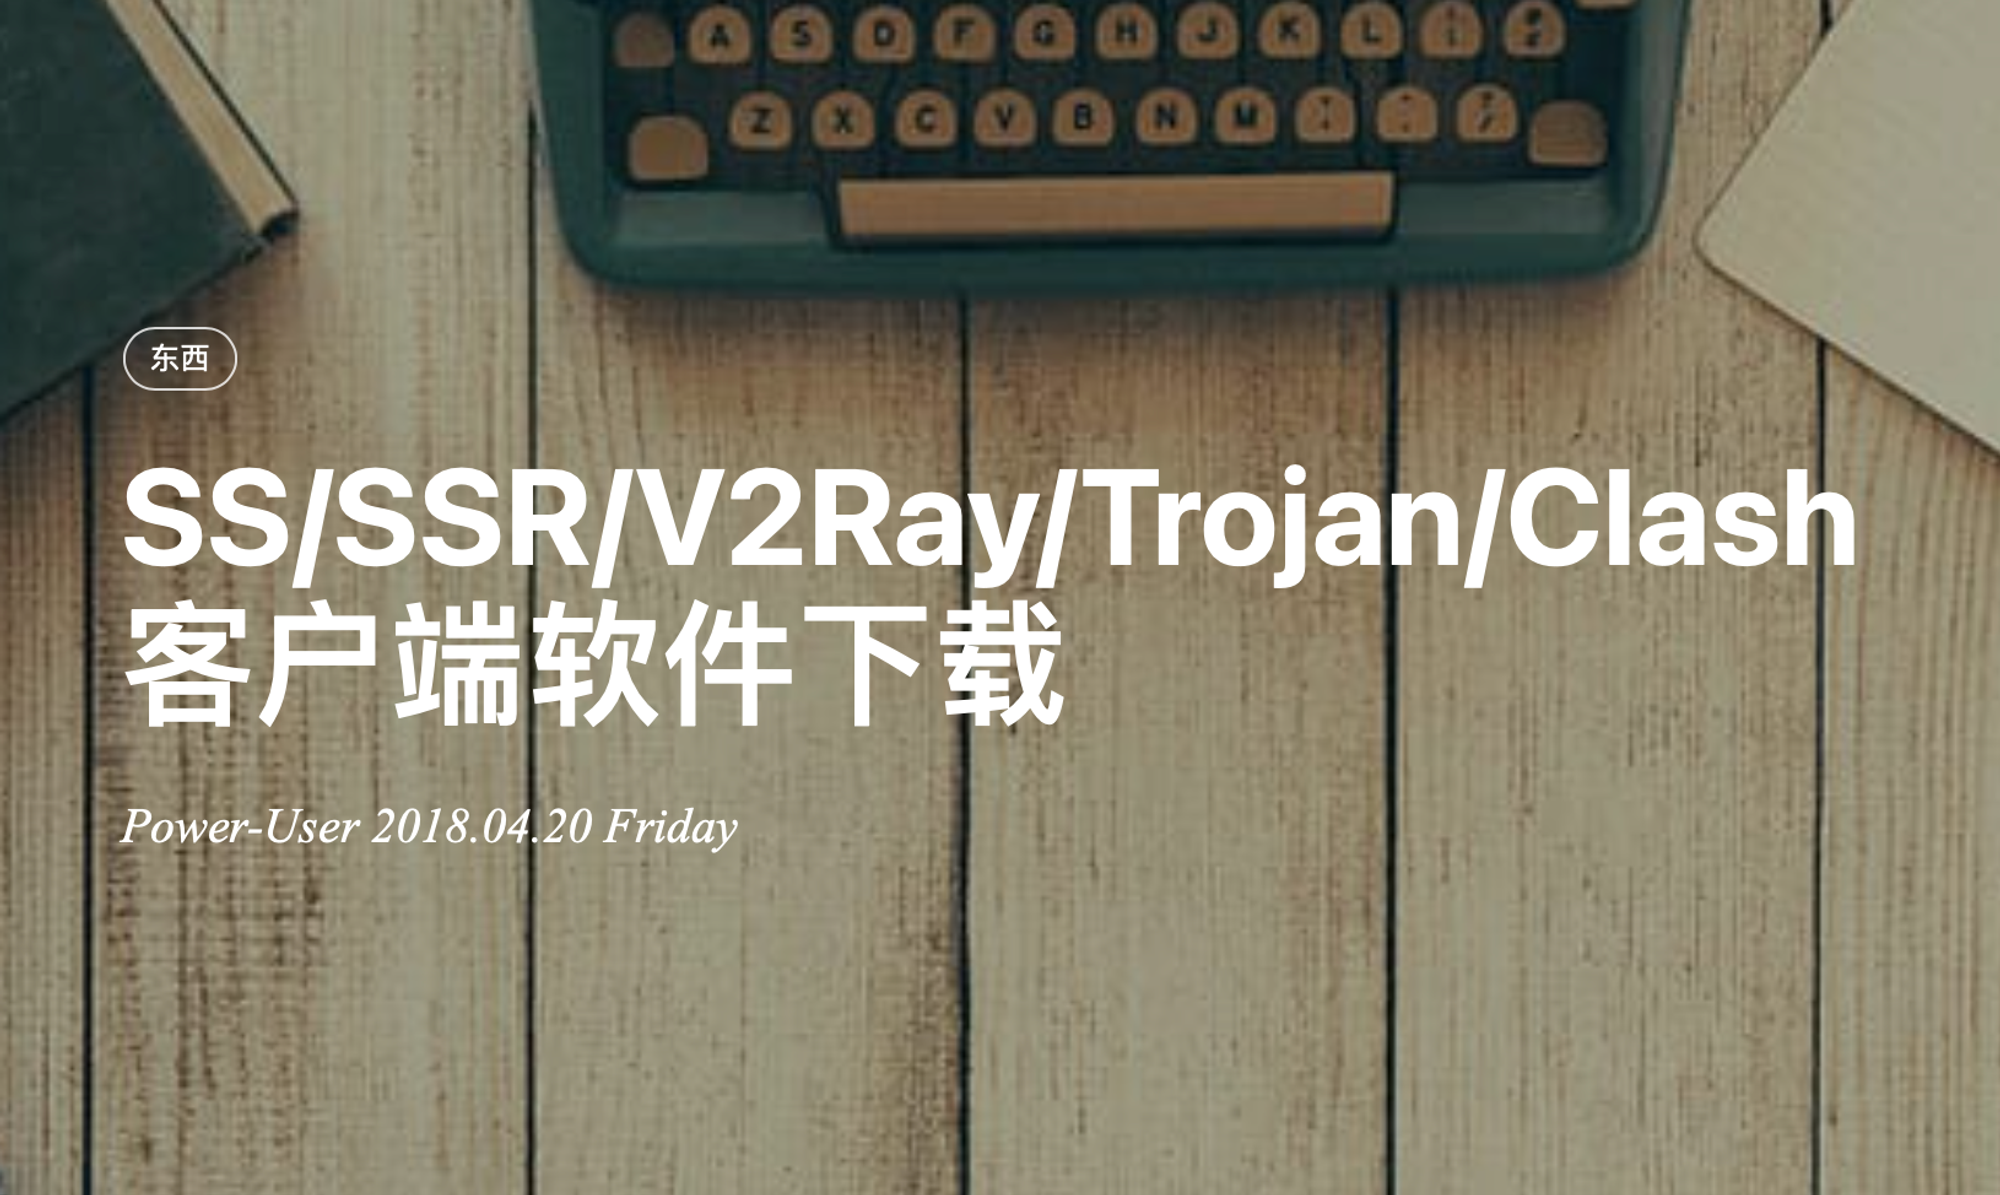 【转载】SS/SSR/V2Ray/Trojan/Clash 客户端软件下载